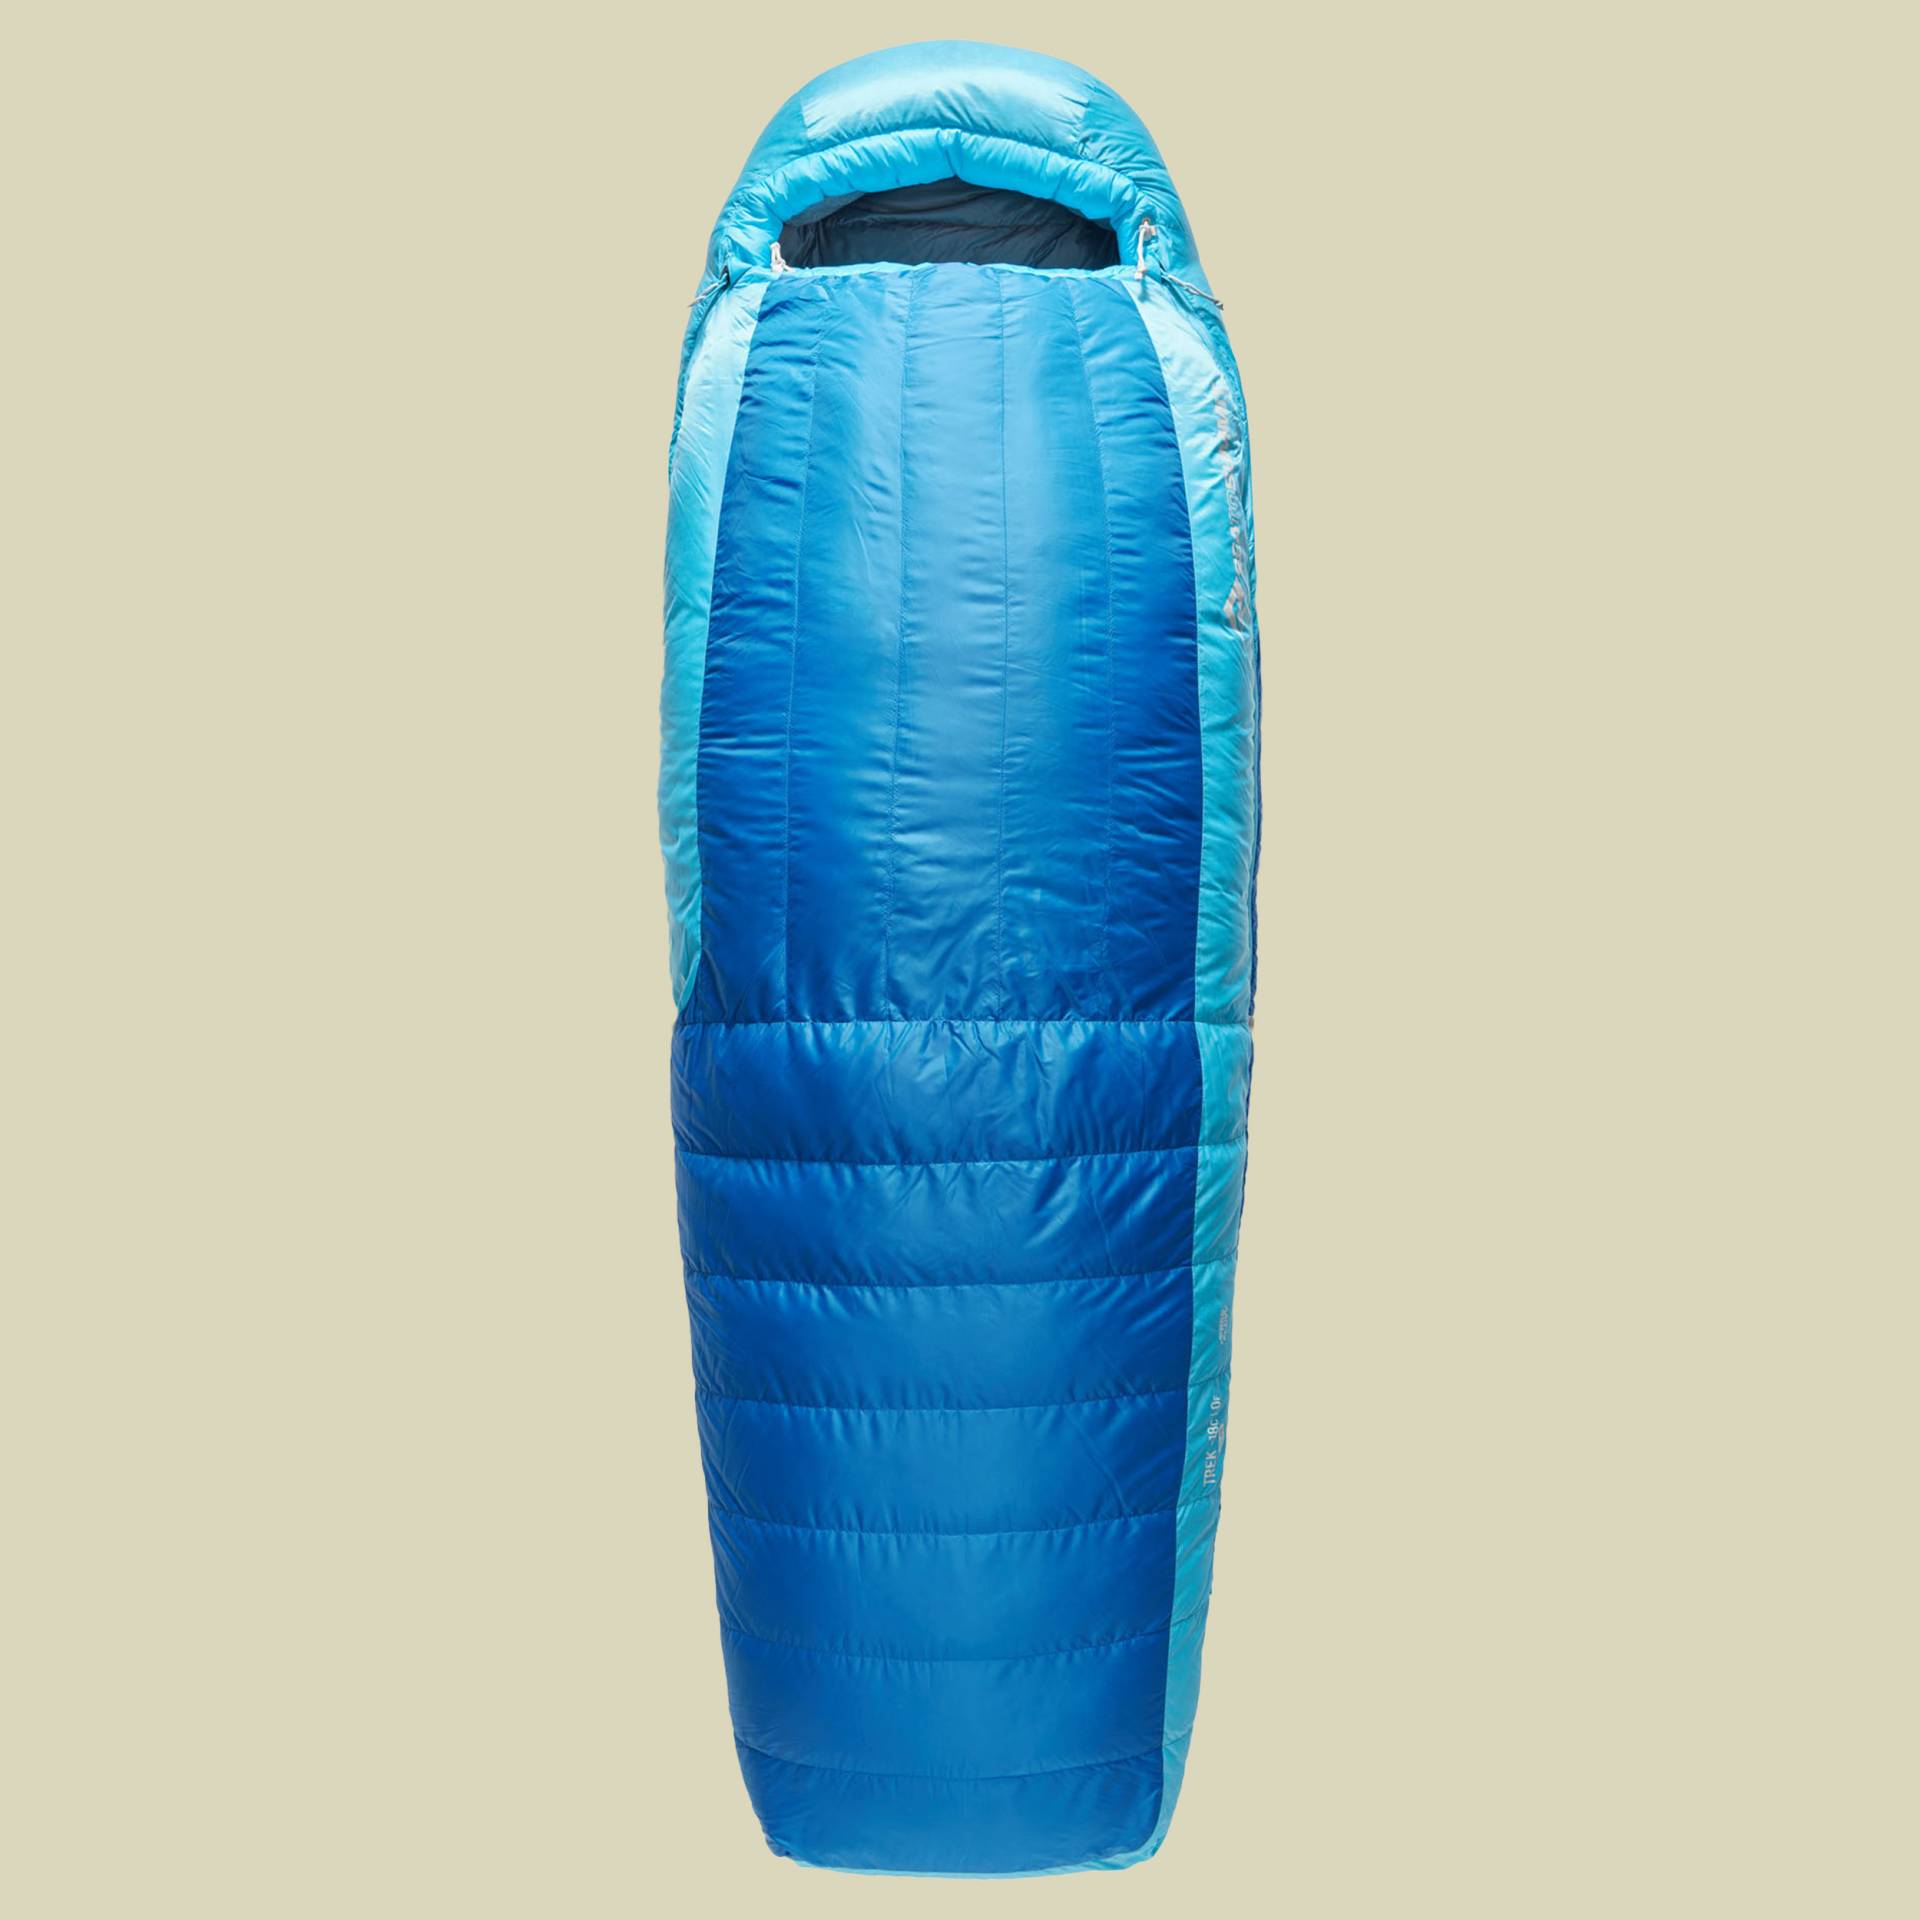 Trek -18C Down Sleeping Bag 198 cm blau - long snorkel blue von Sea to Summit